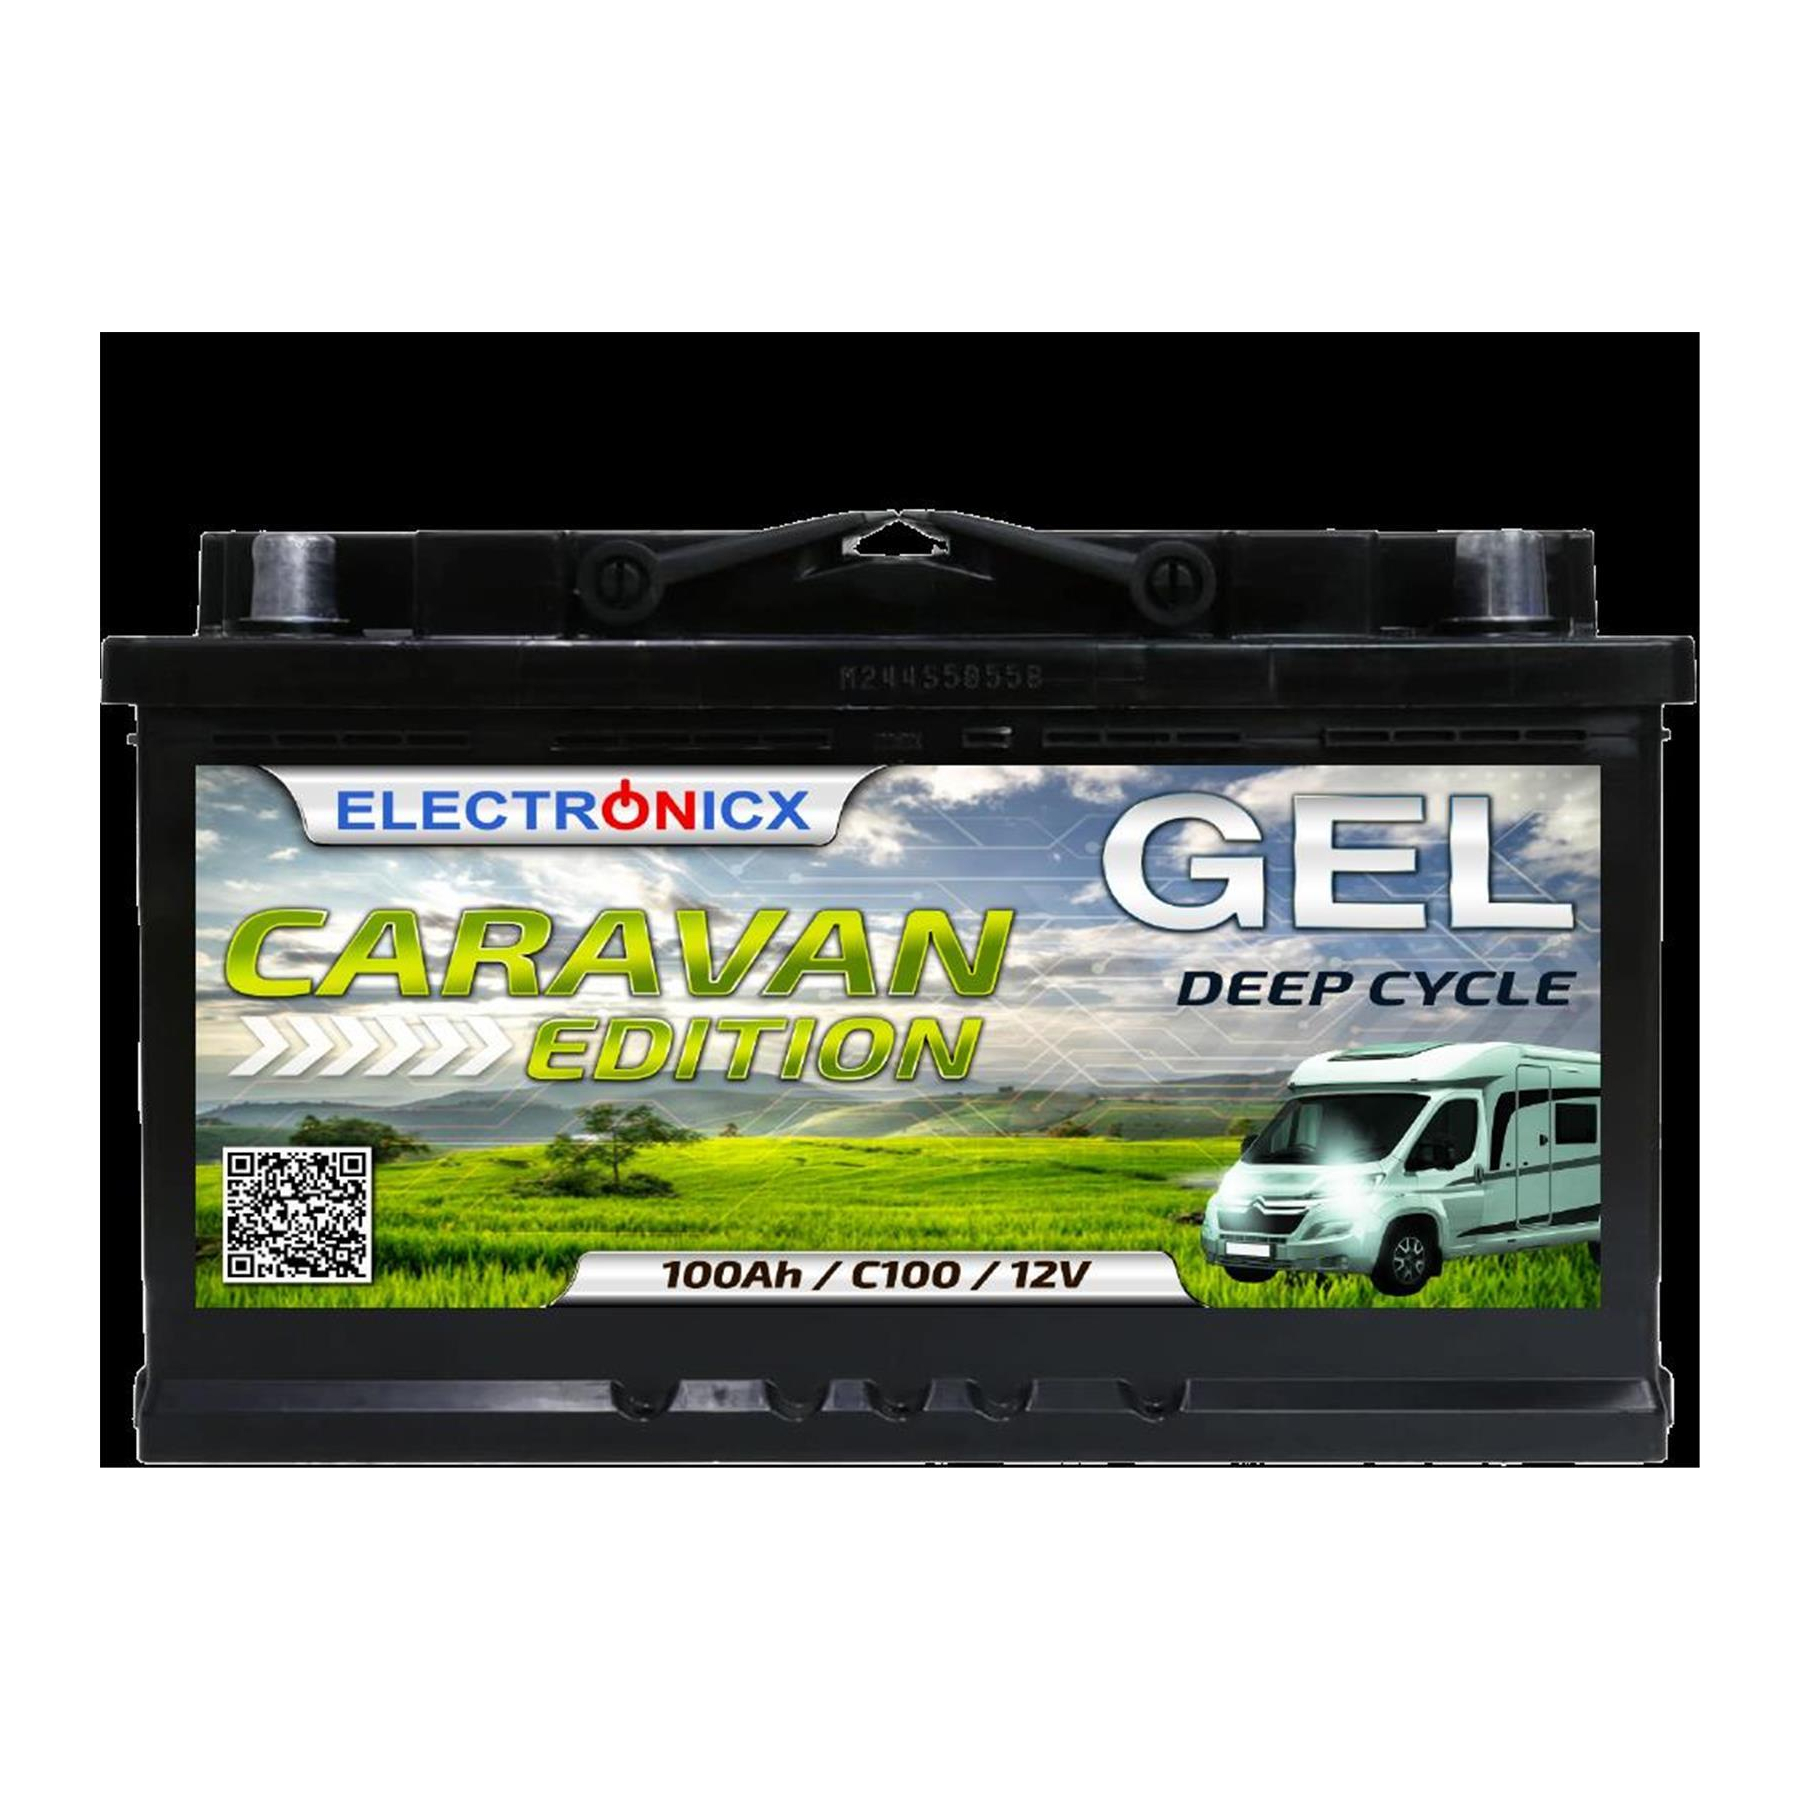 Electronicx Caravan Edition GEL Batterie 100 AH 12V, 144,90 €